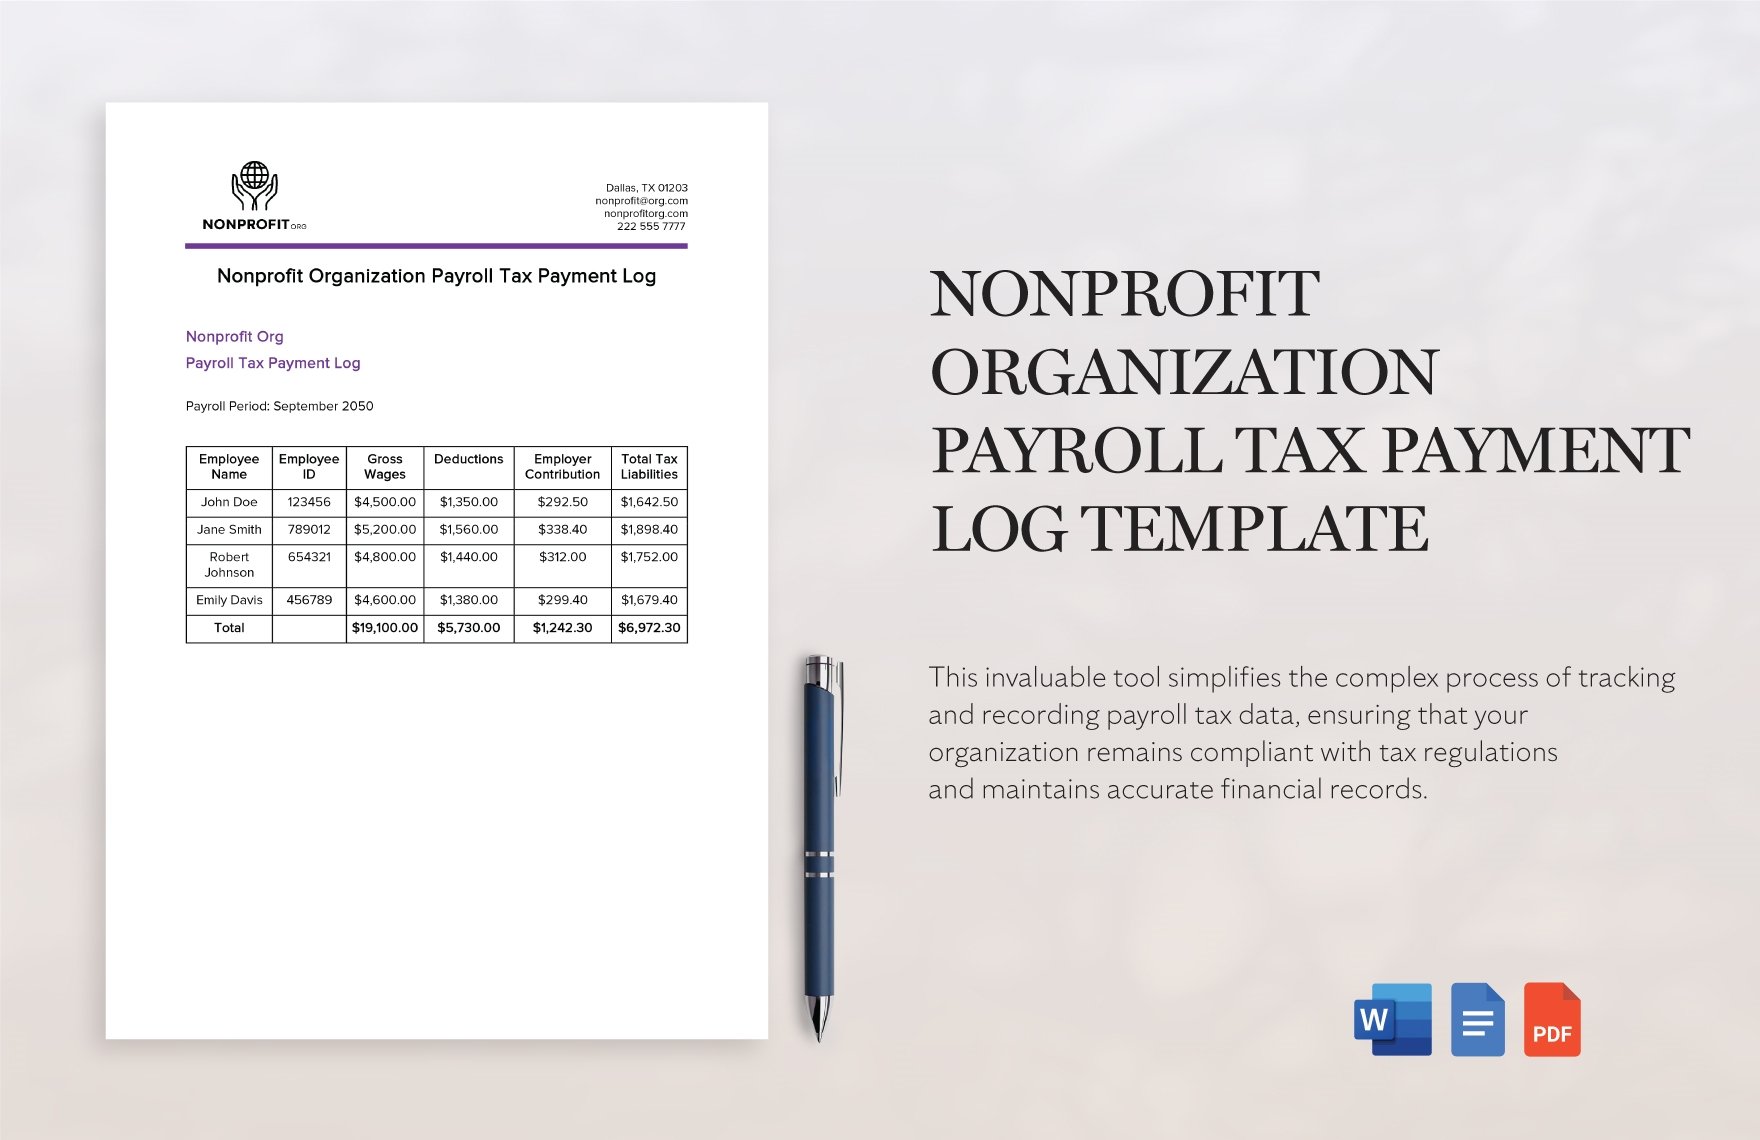 Nonprofit Organization Payroll Tax Payment Log Template in Word, Google Docs, PDF